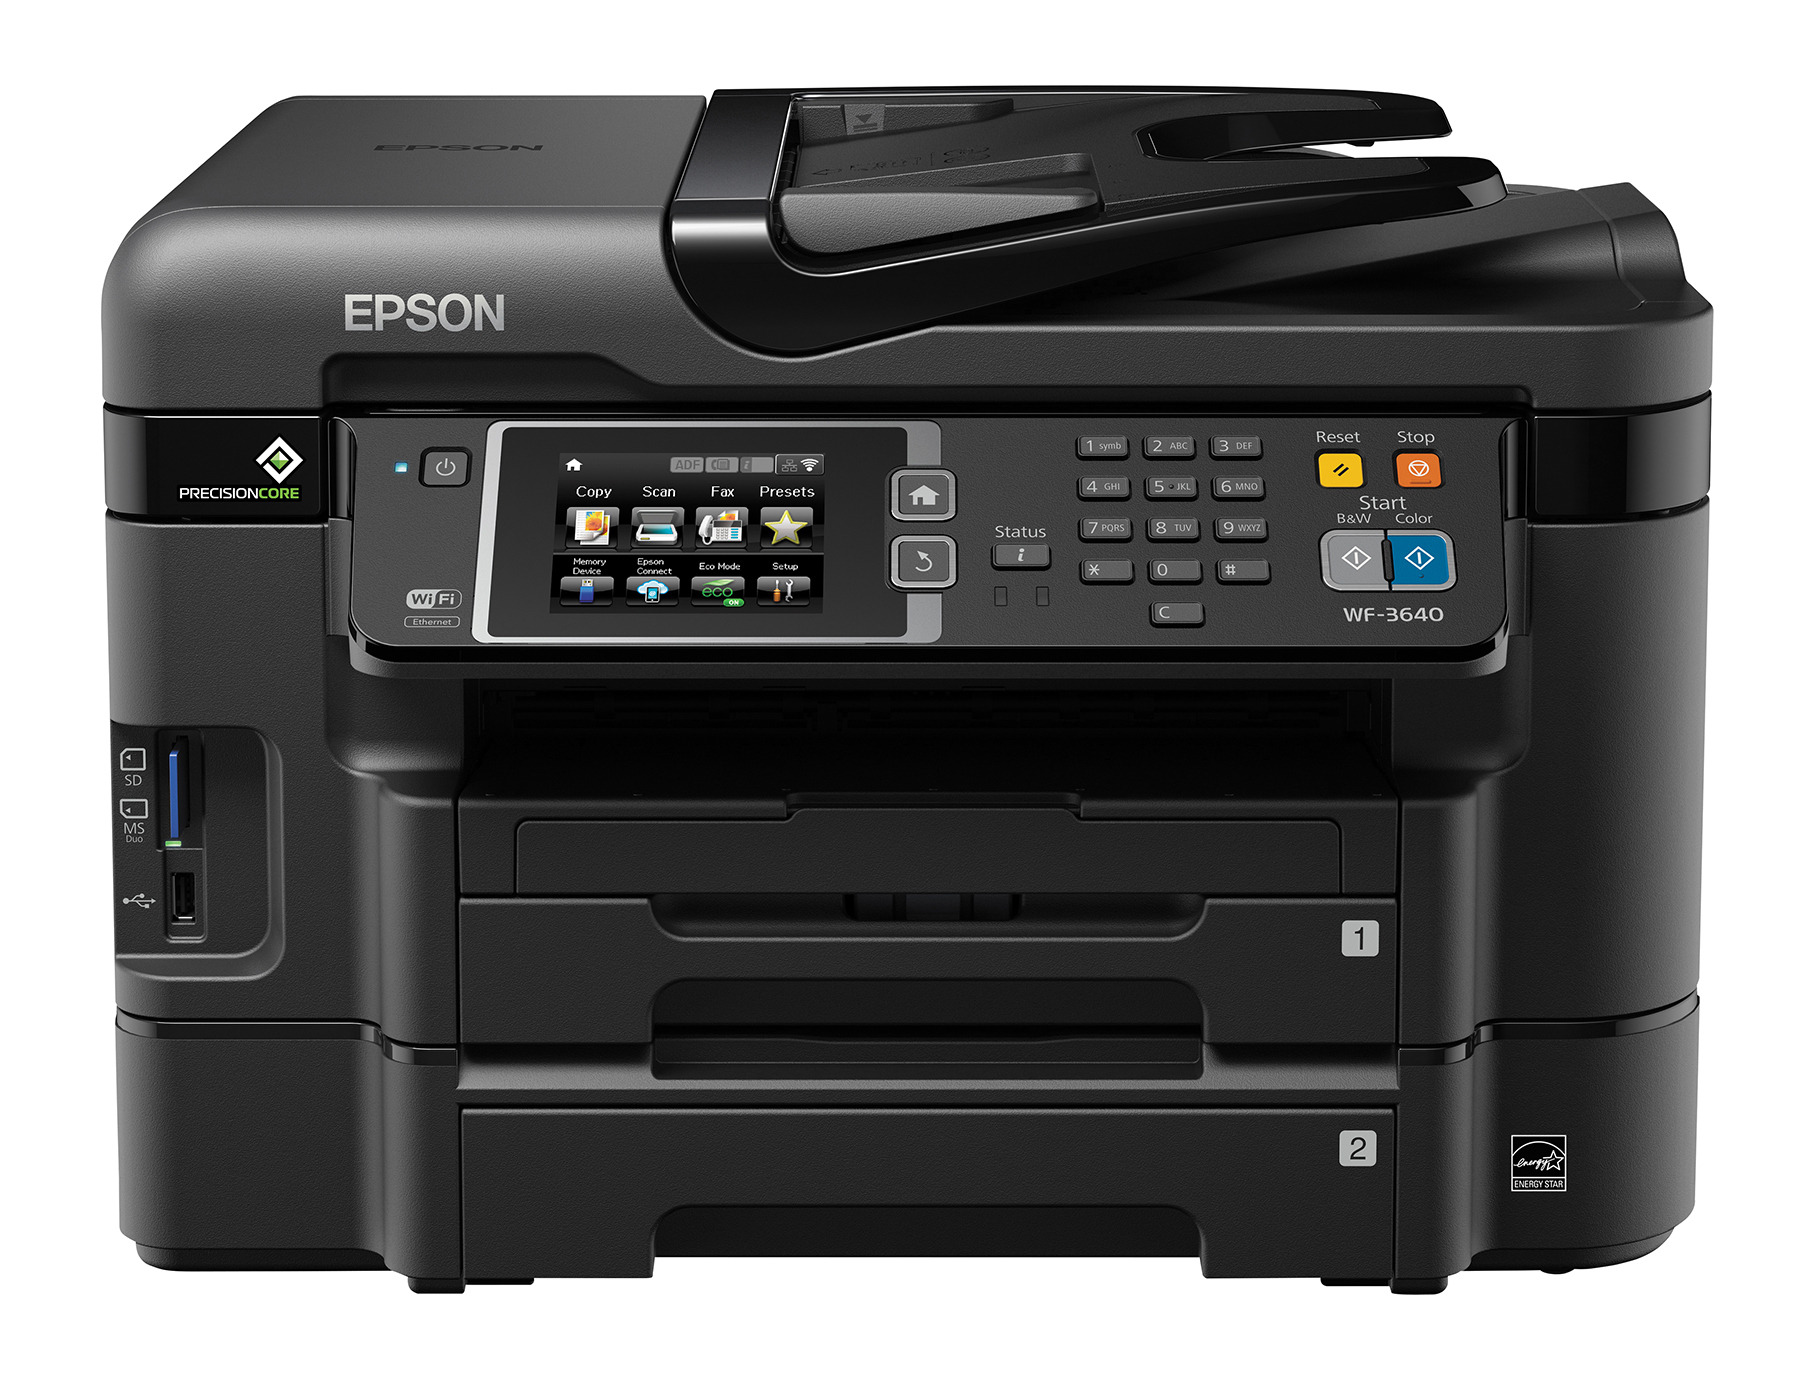 epson workforce wf-2540 all-in-one printer user manual